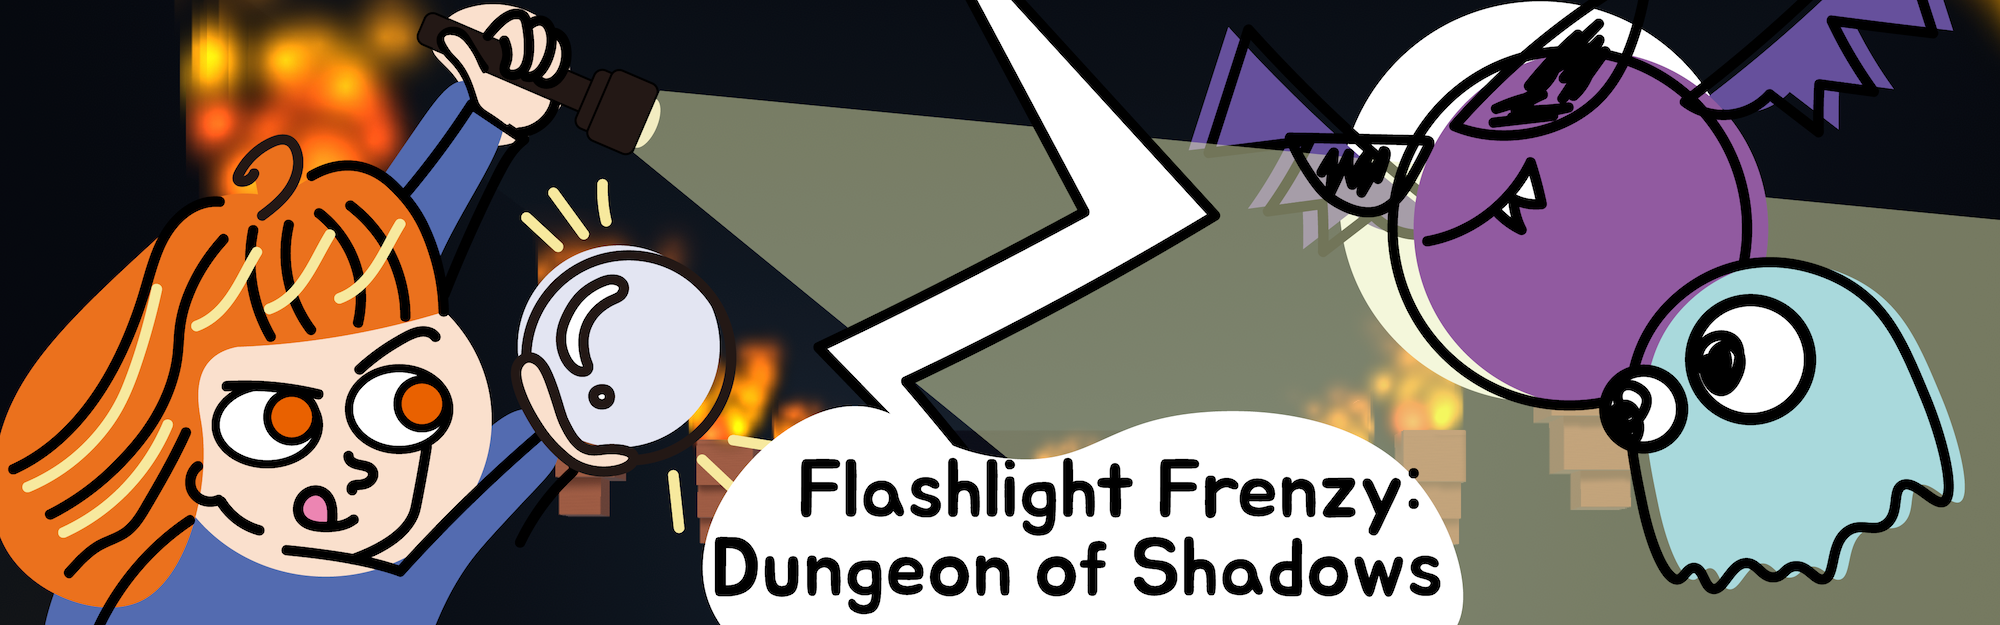 Flashlight Frenzy: Dungeon of Shadows